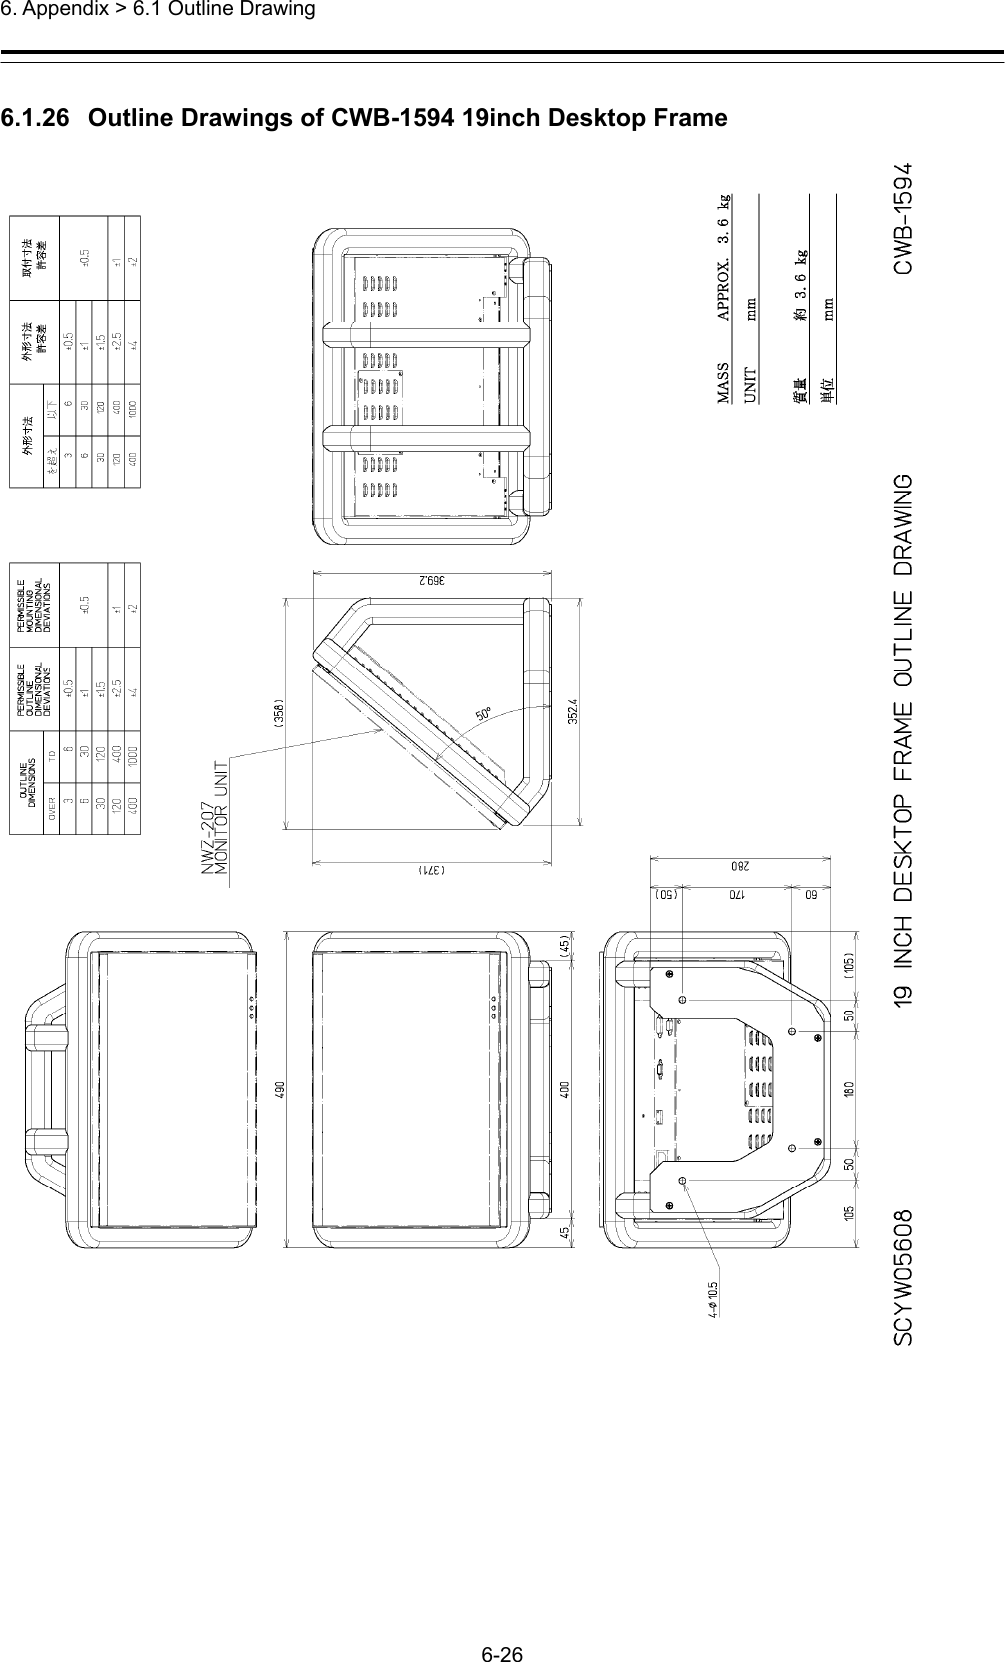  6. Appendix &gt; 6.1 Outline Drawing 6-26  6.1.26   Outline Drawings of CWB-1594 19inch Desktop Frame  